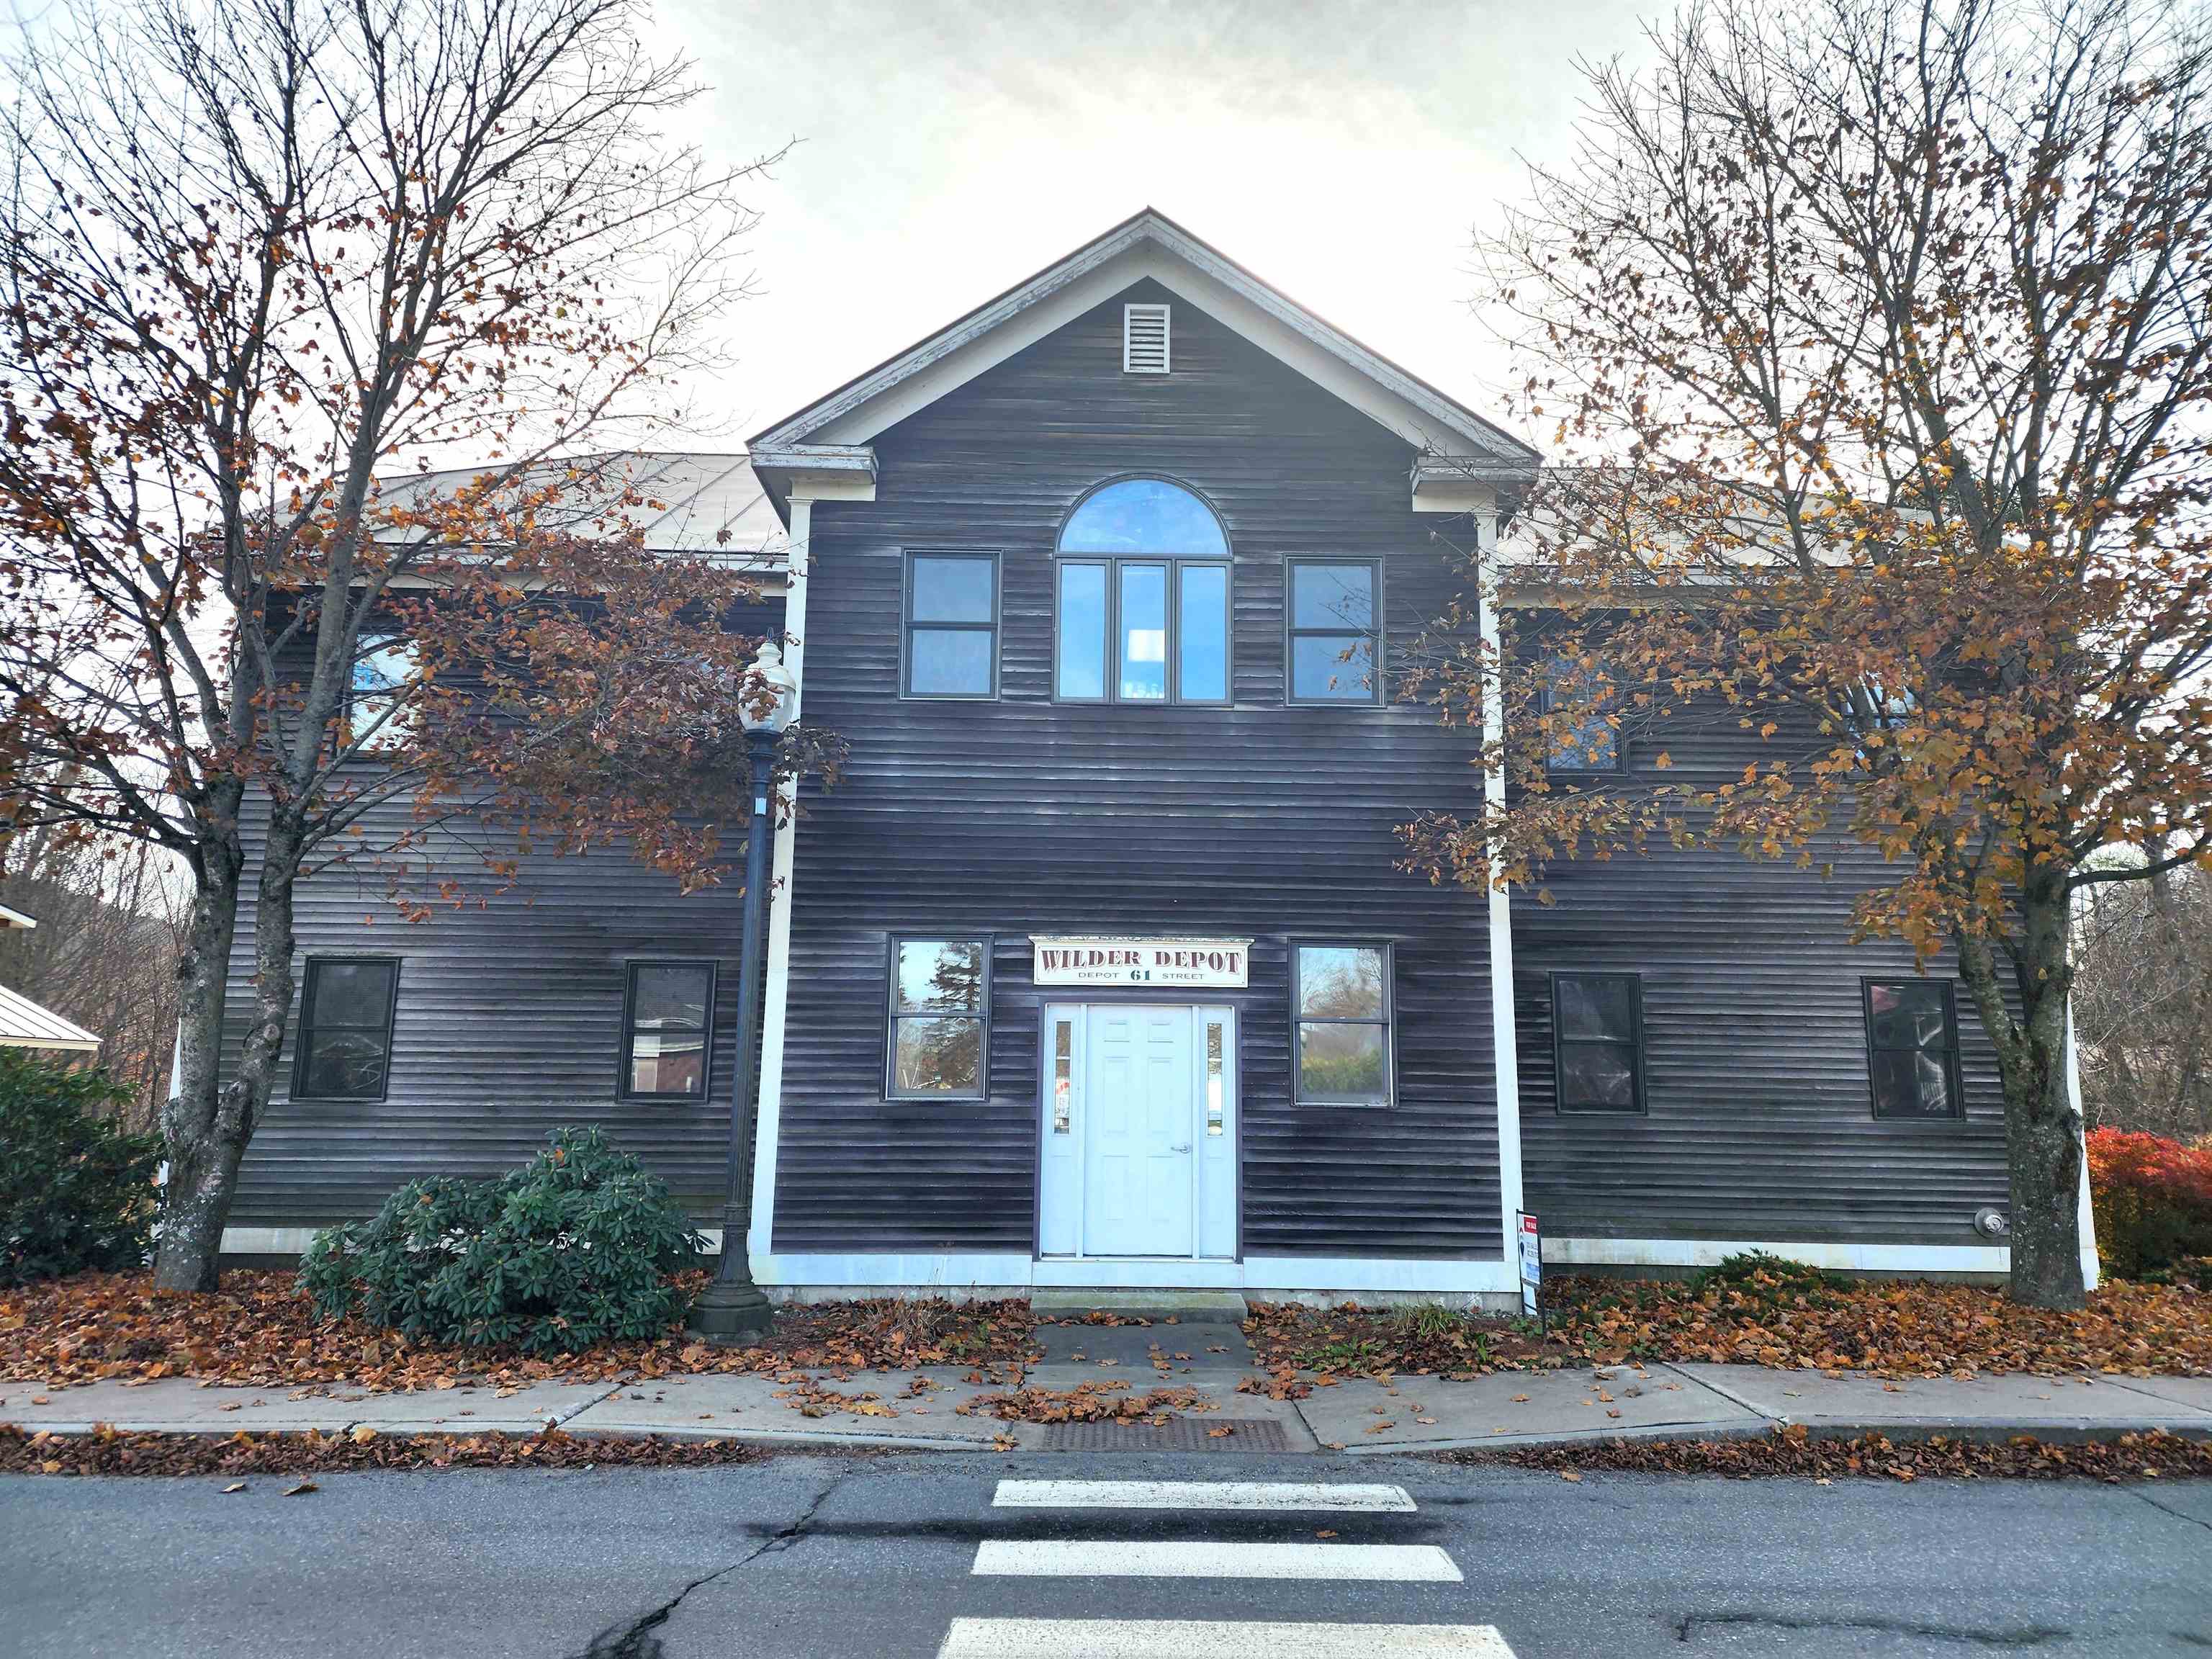 VILLAGE OF WILDER IN TOWN OF HARTFORD VT Multi Family for sale $$800,000 | $115 per sq.ft.